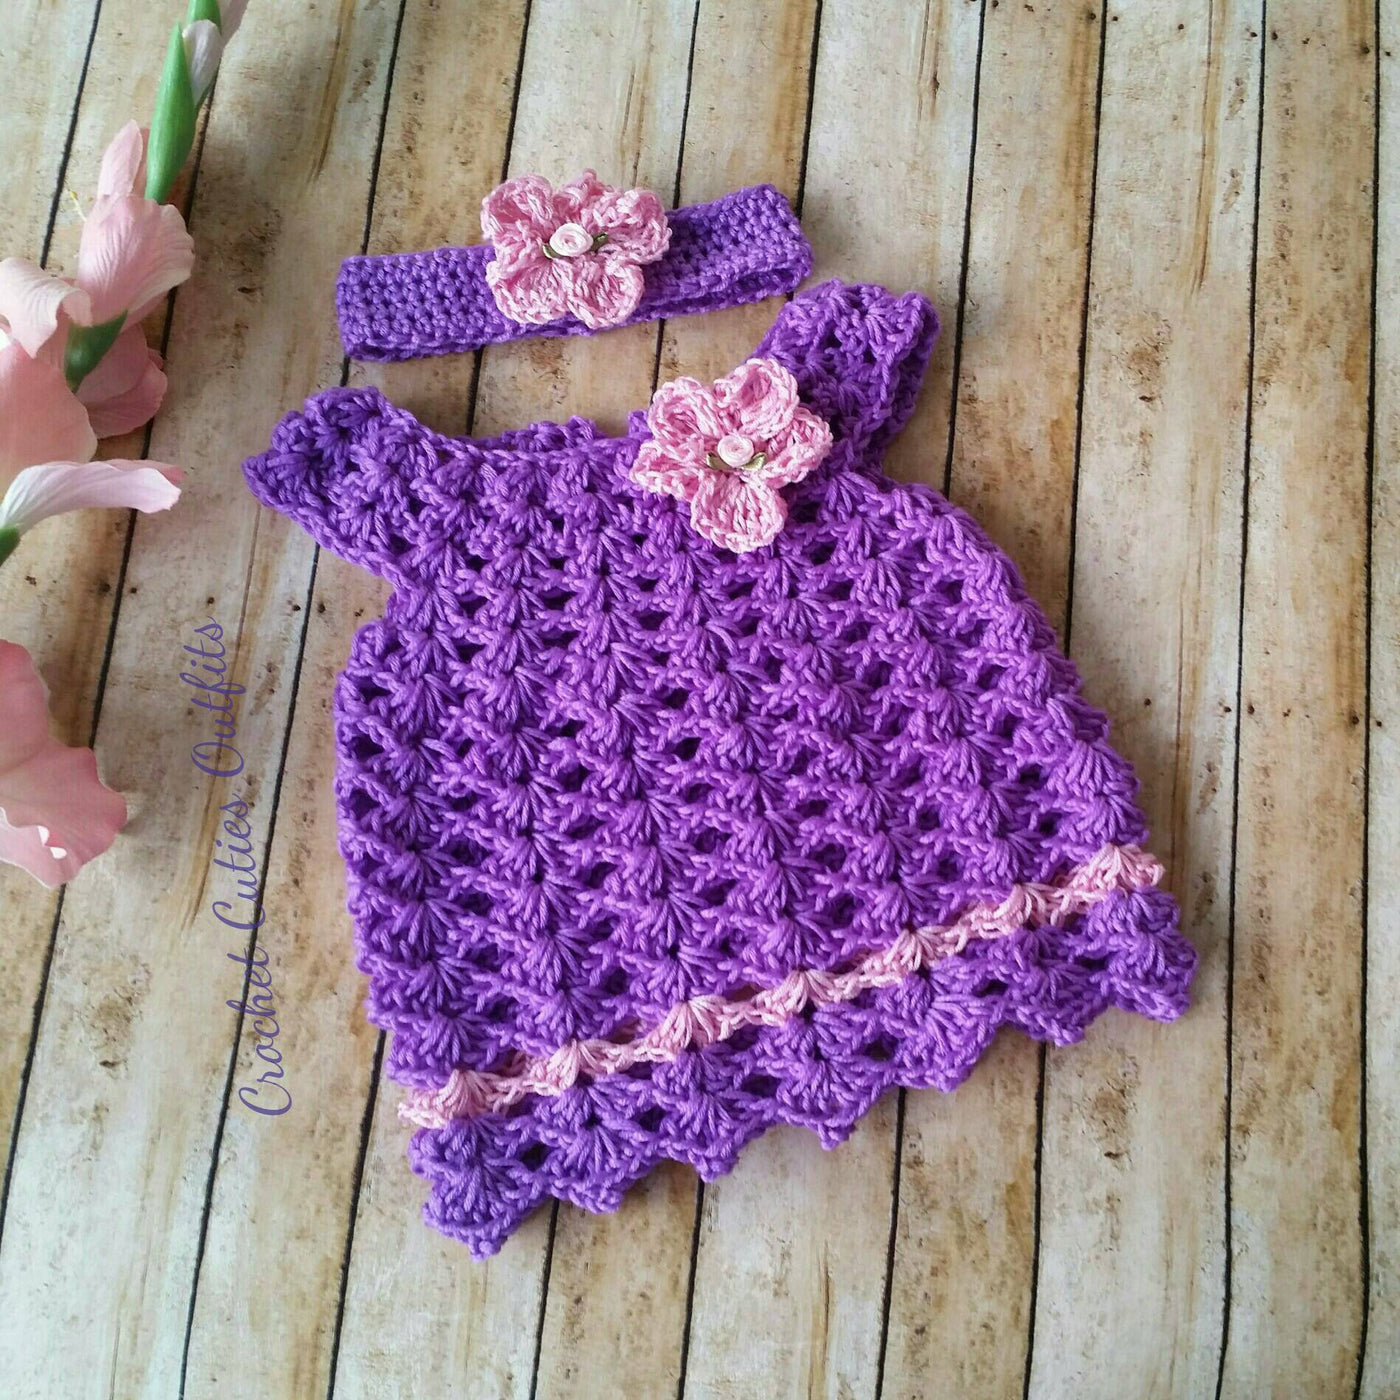 Crochet Baby Dress Pattern Newborn Outfit Baby Girl Clothes Crochet Baby Dress Digital Download Pattern PDF Pattern Purple Crochet Baby